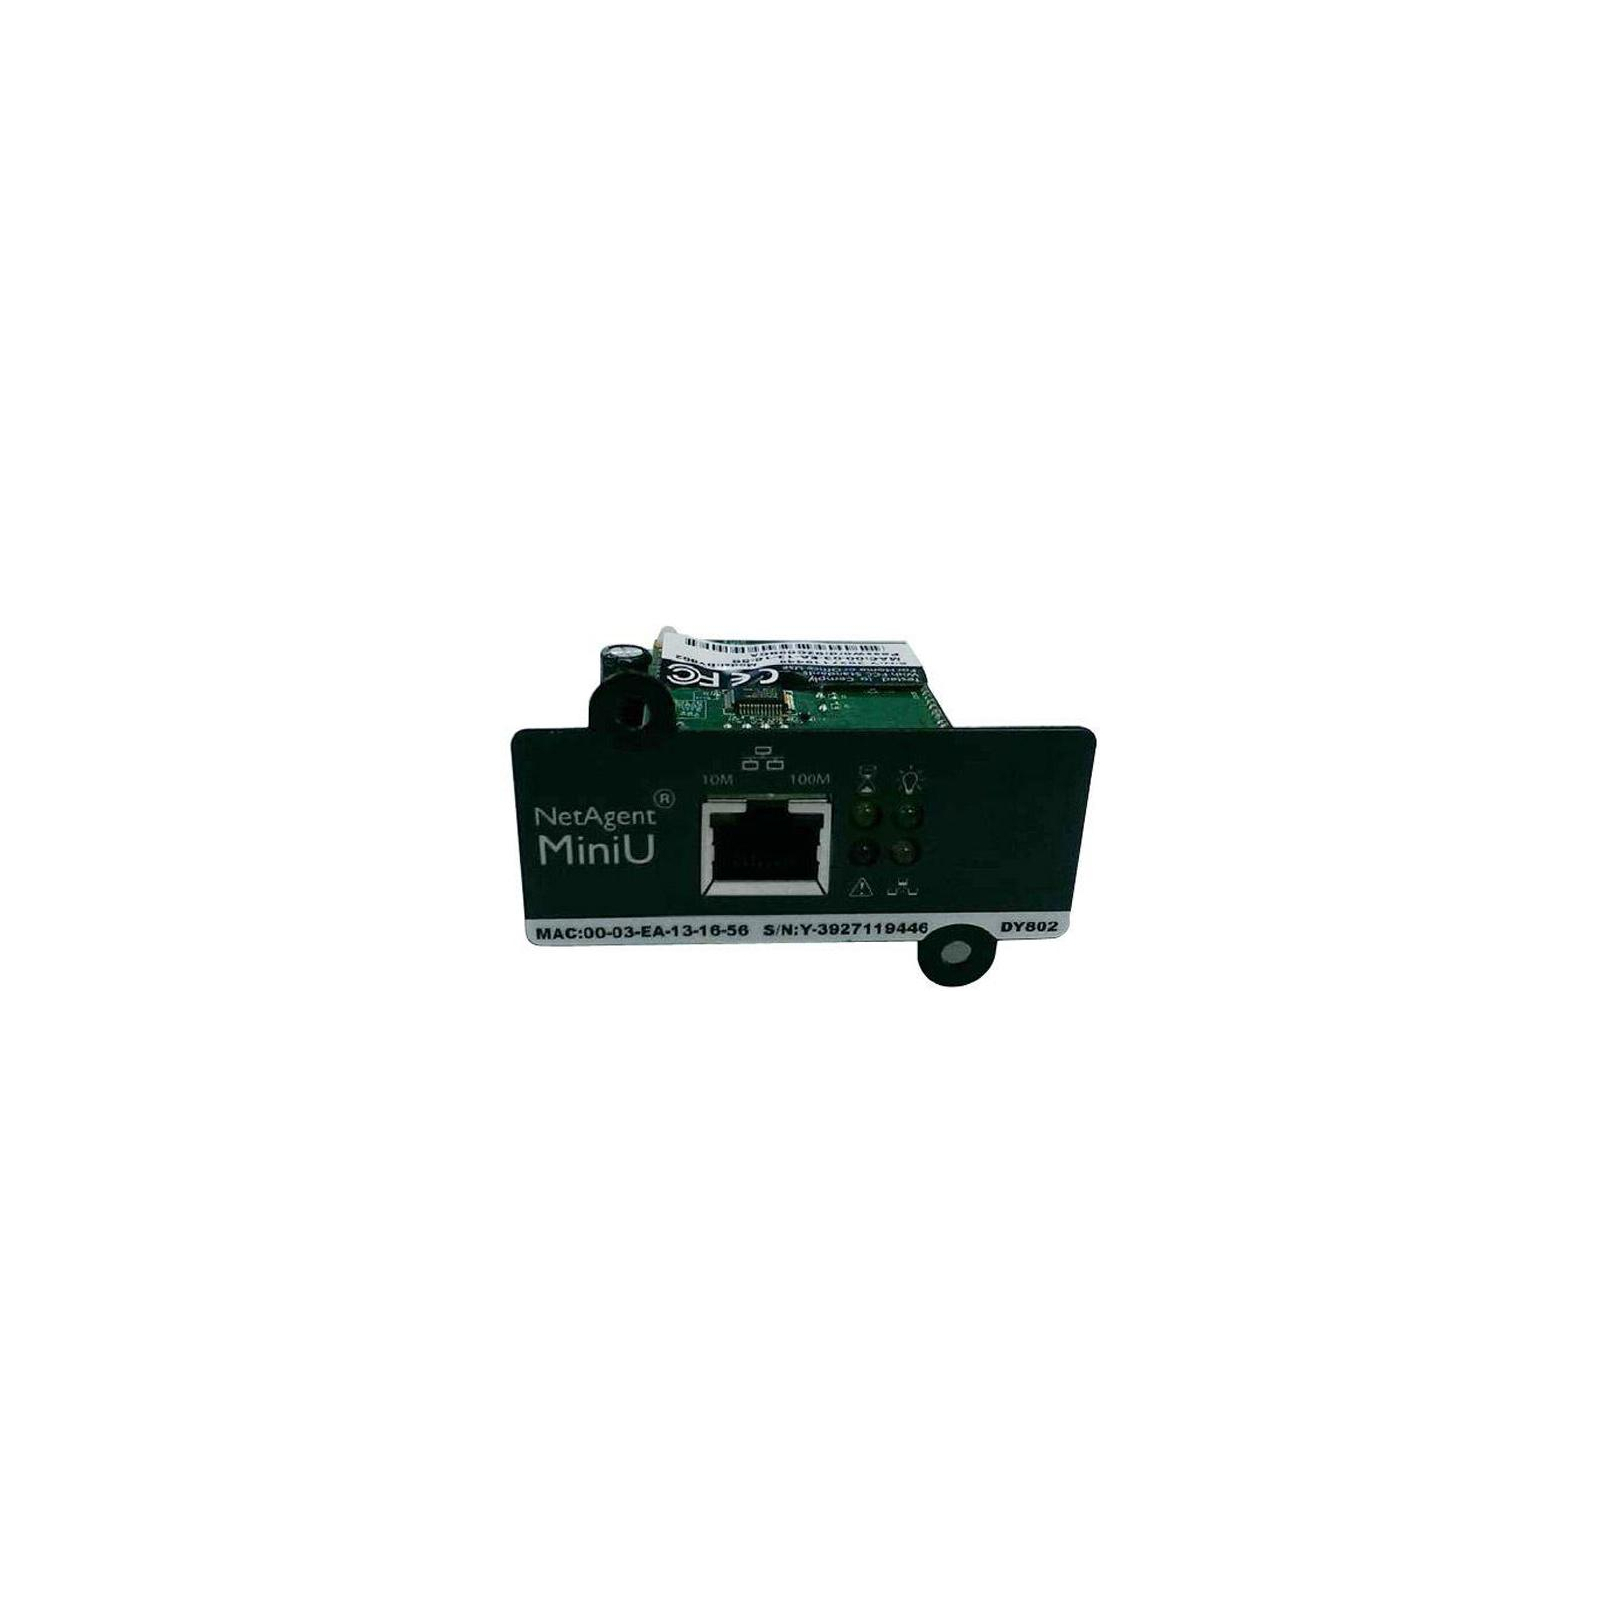 Сетевая карта Powercom SNMP-адаптер NetAgent (DY802) 1-port (DY802)